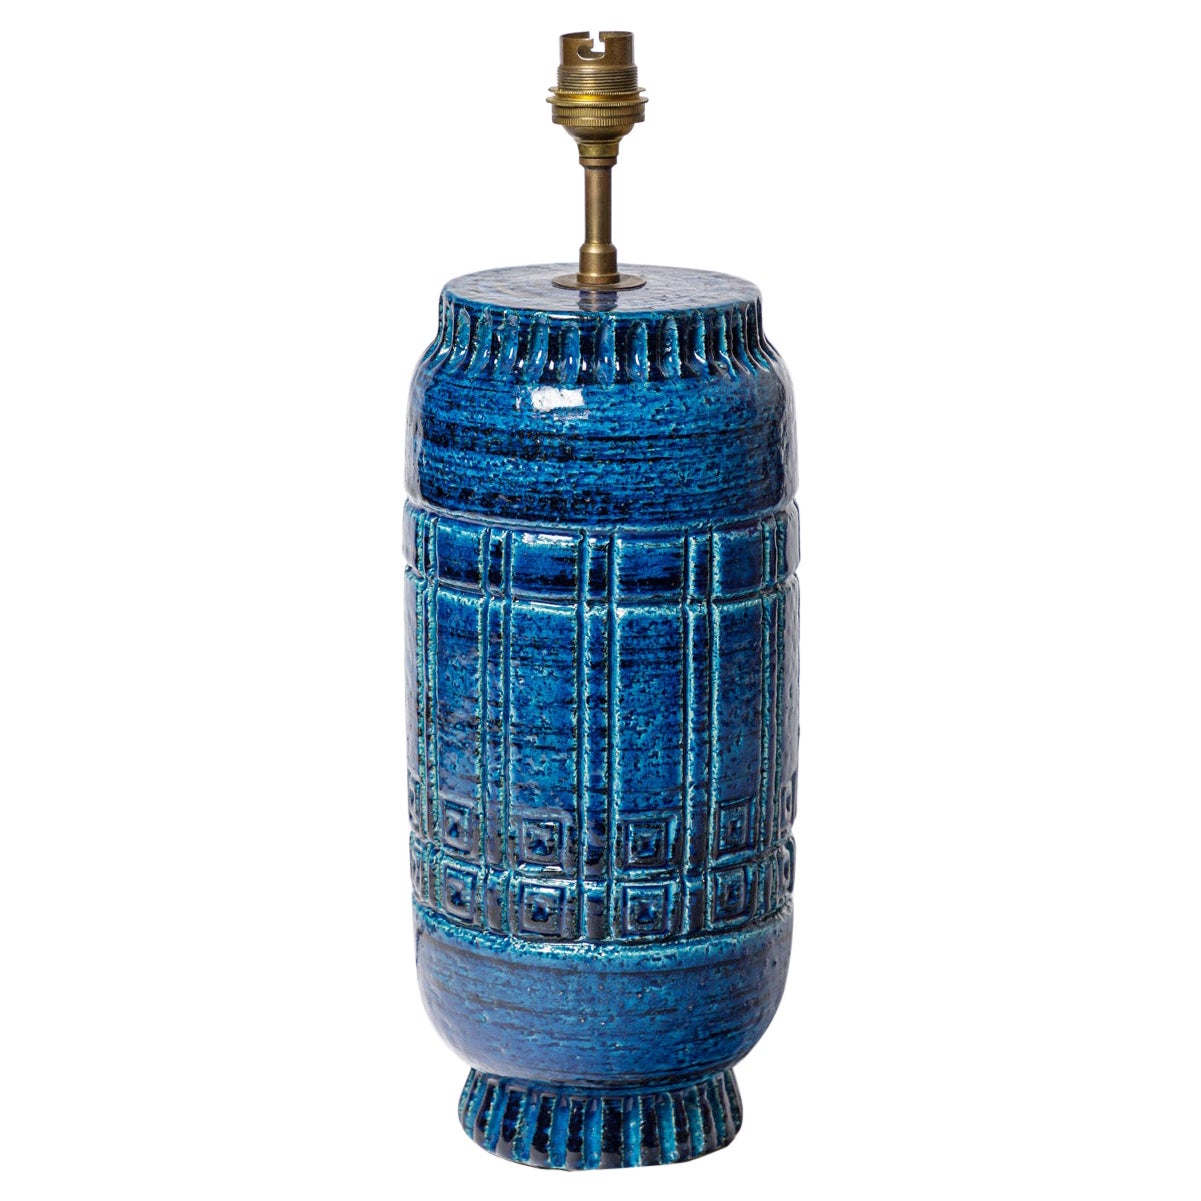 Pol Chambost Blaue XX. Keramik-Tischlampe, Design Modell 1307